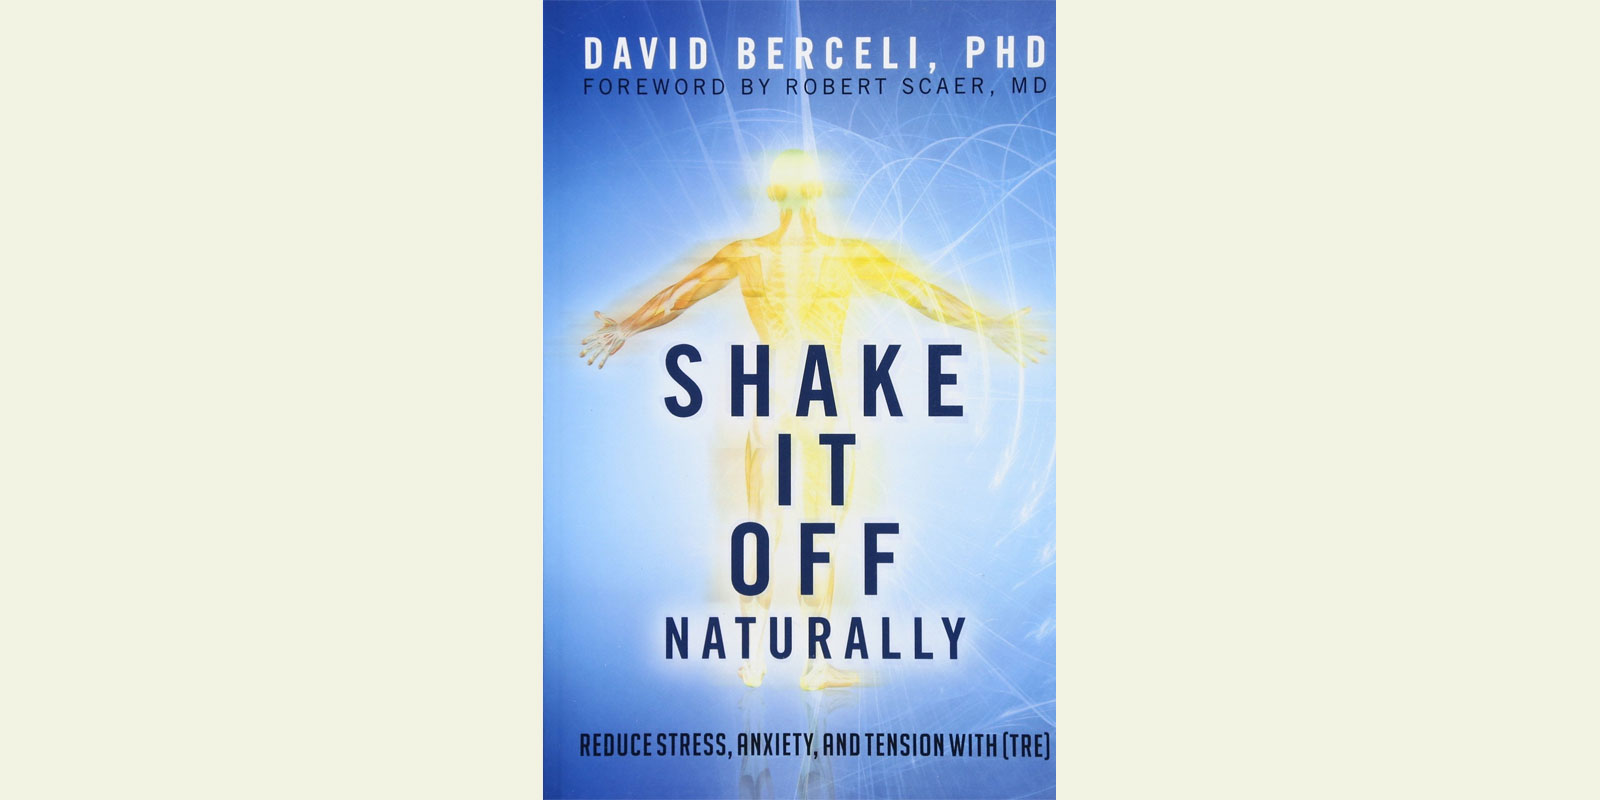 David Berceli - Shake it off naturally